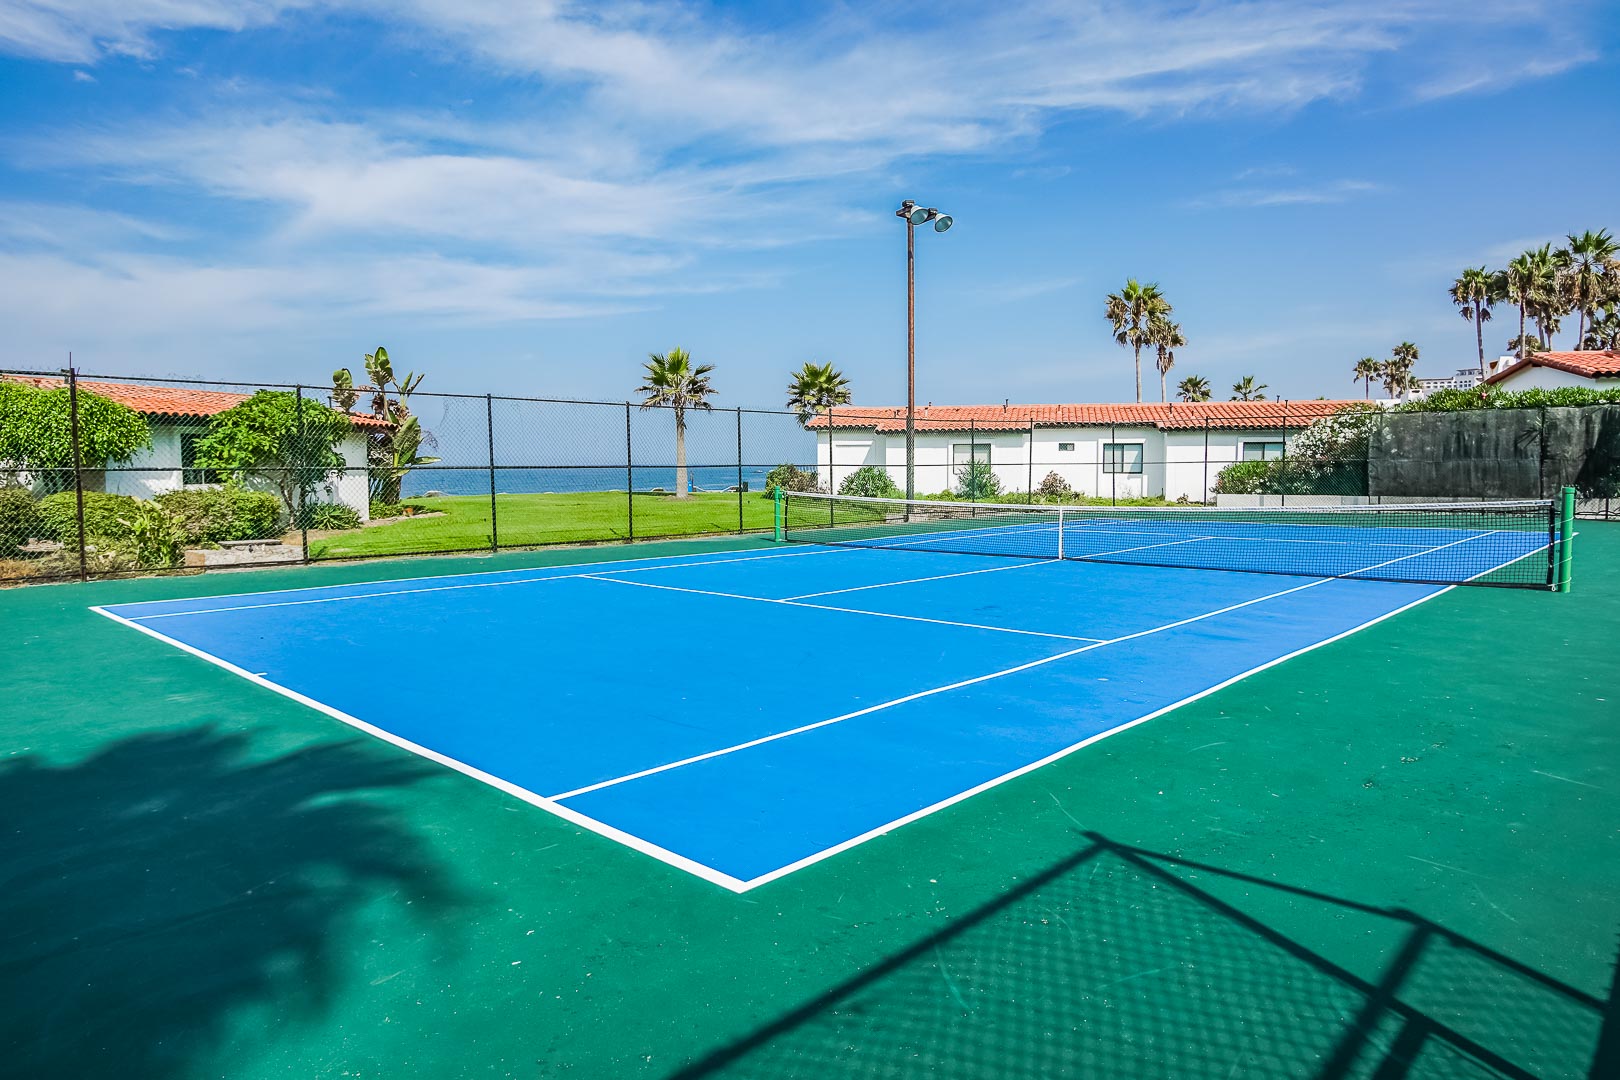 A vibrant tennis court by the beach A crisp outdoor swimming pool at VRI's La Paloma in Rosarito, Mexico.